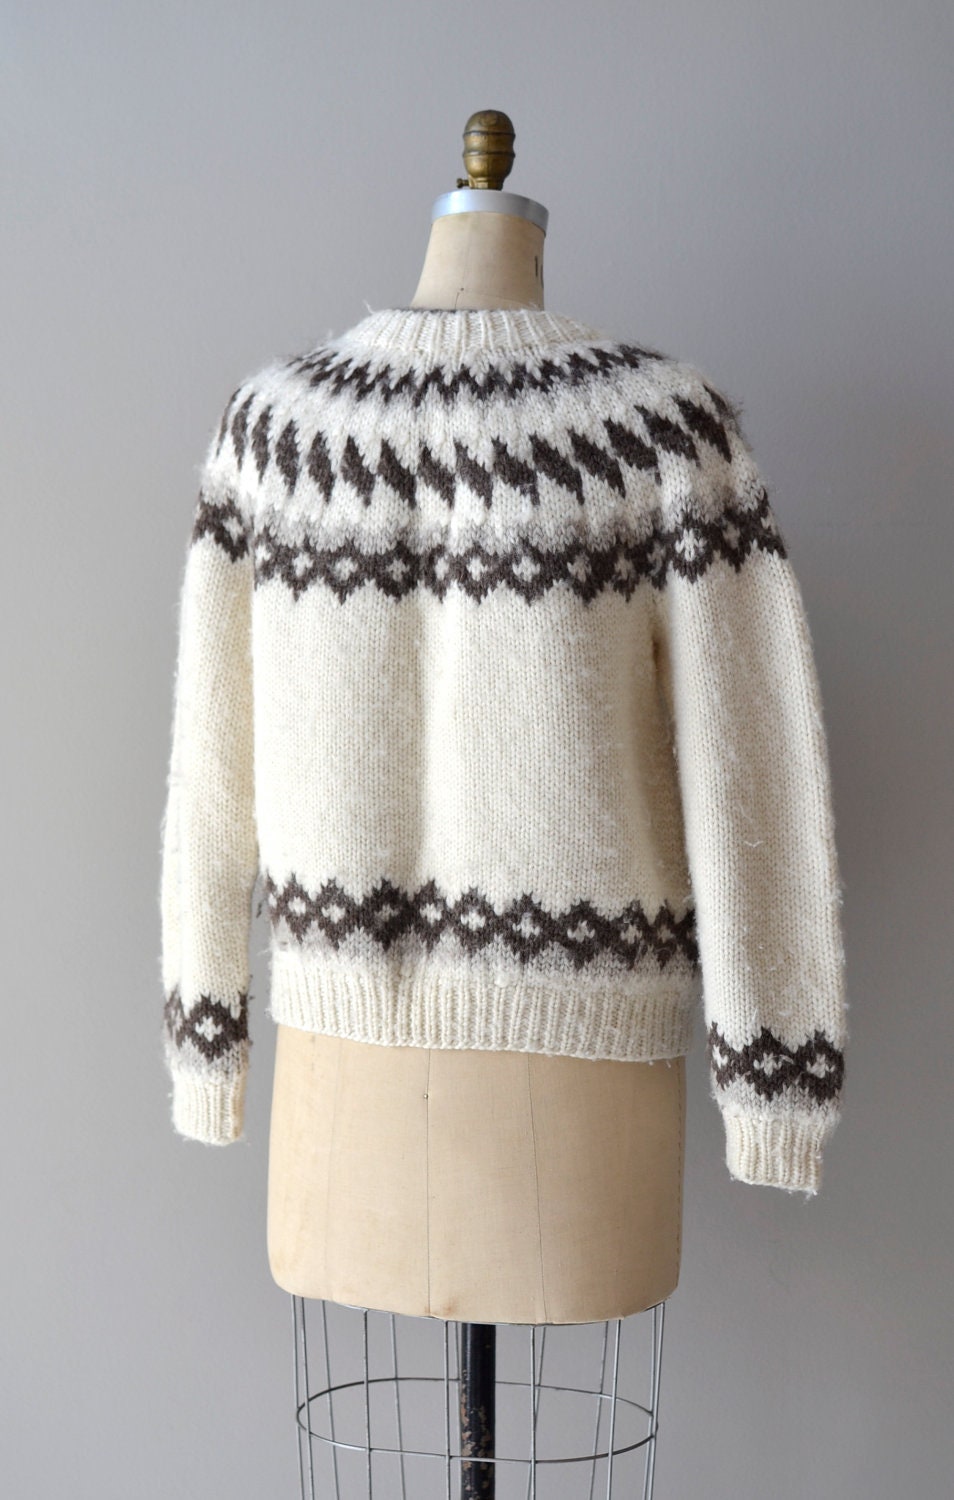 fair isle sweater / wool cardigan / Sumburgh cardigan